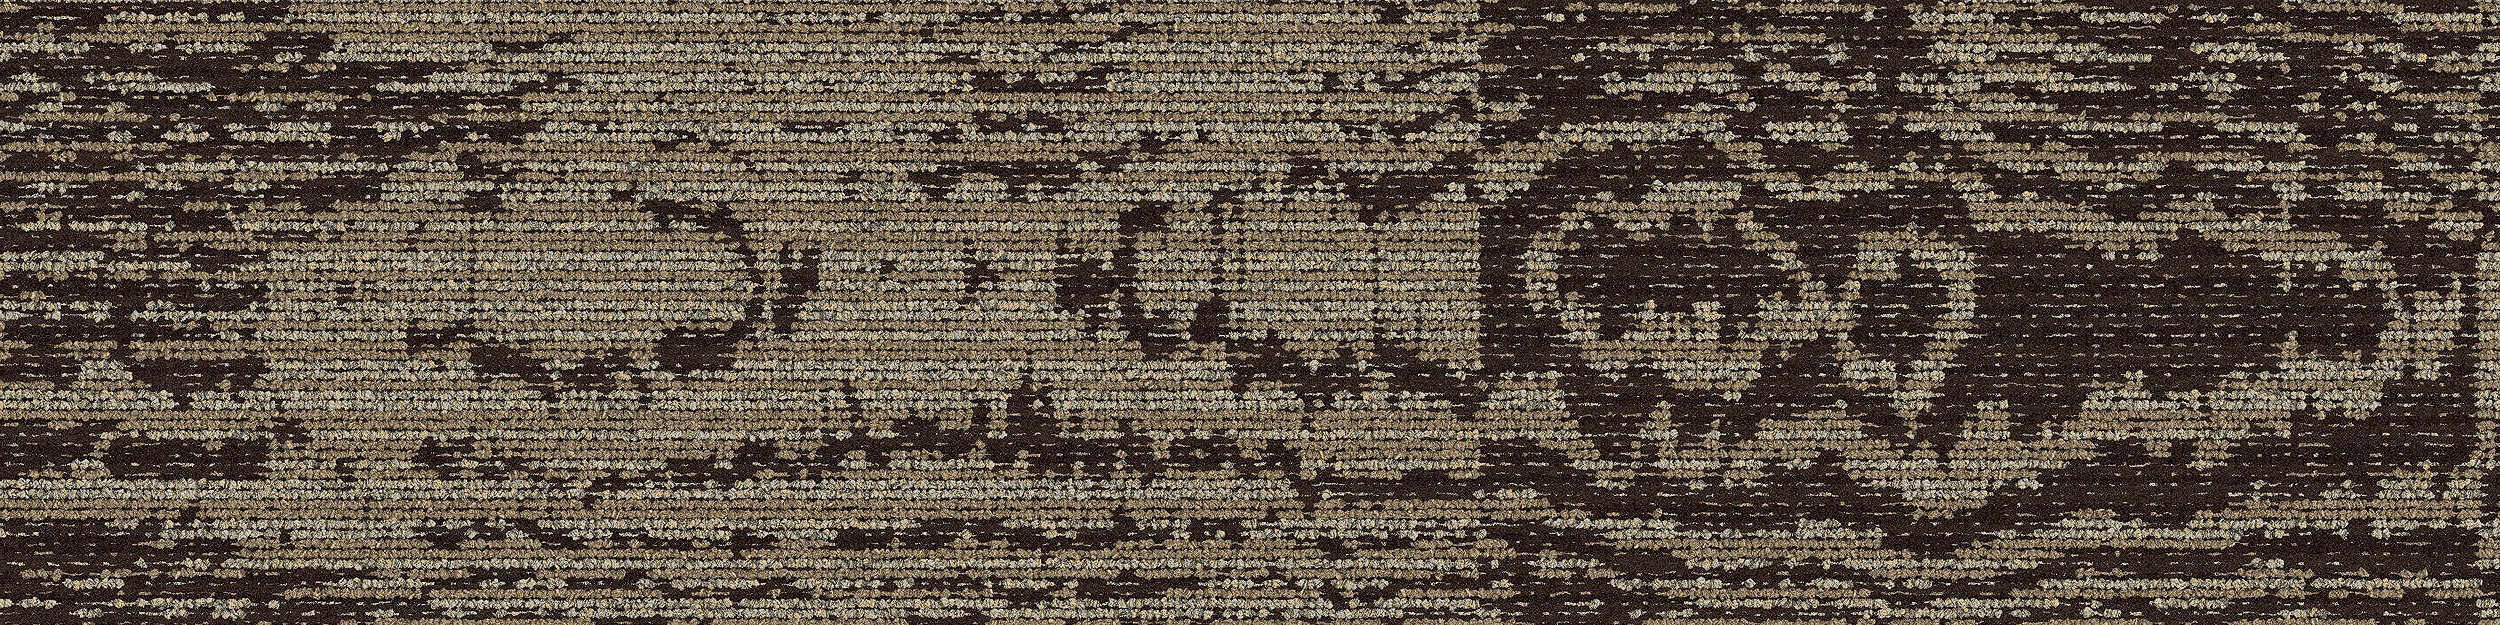 GN156 Carpet Tile In Mushroom imagen número 4